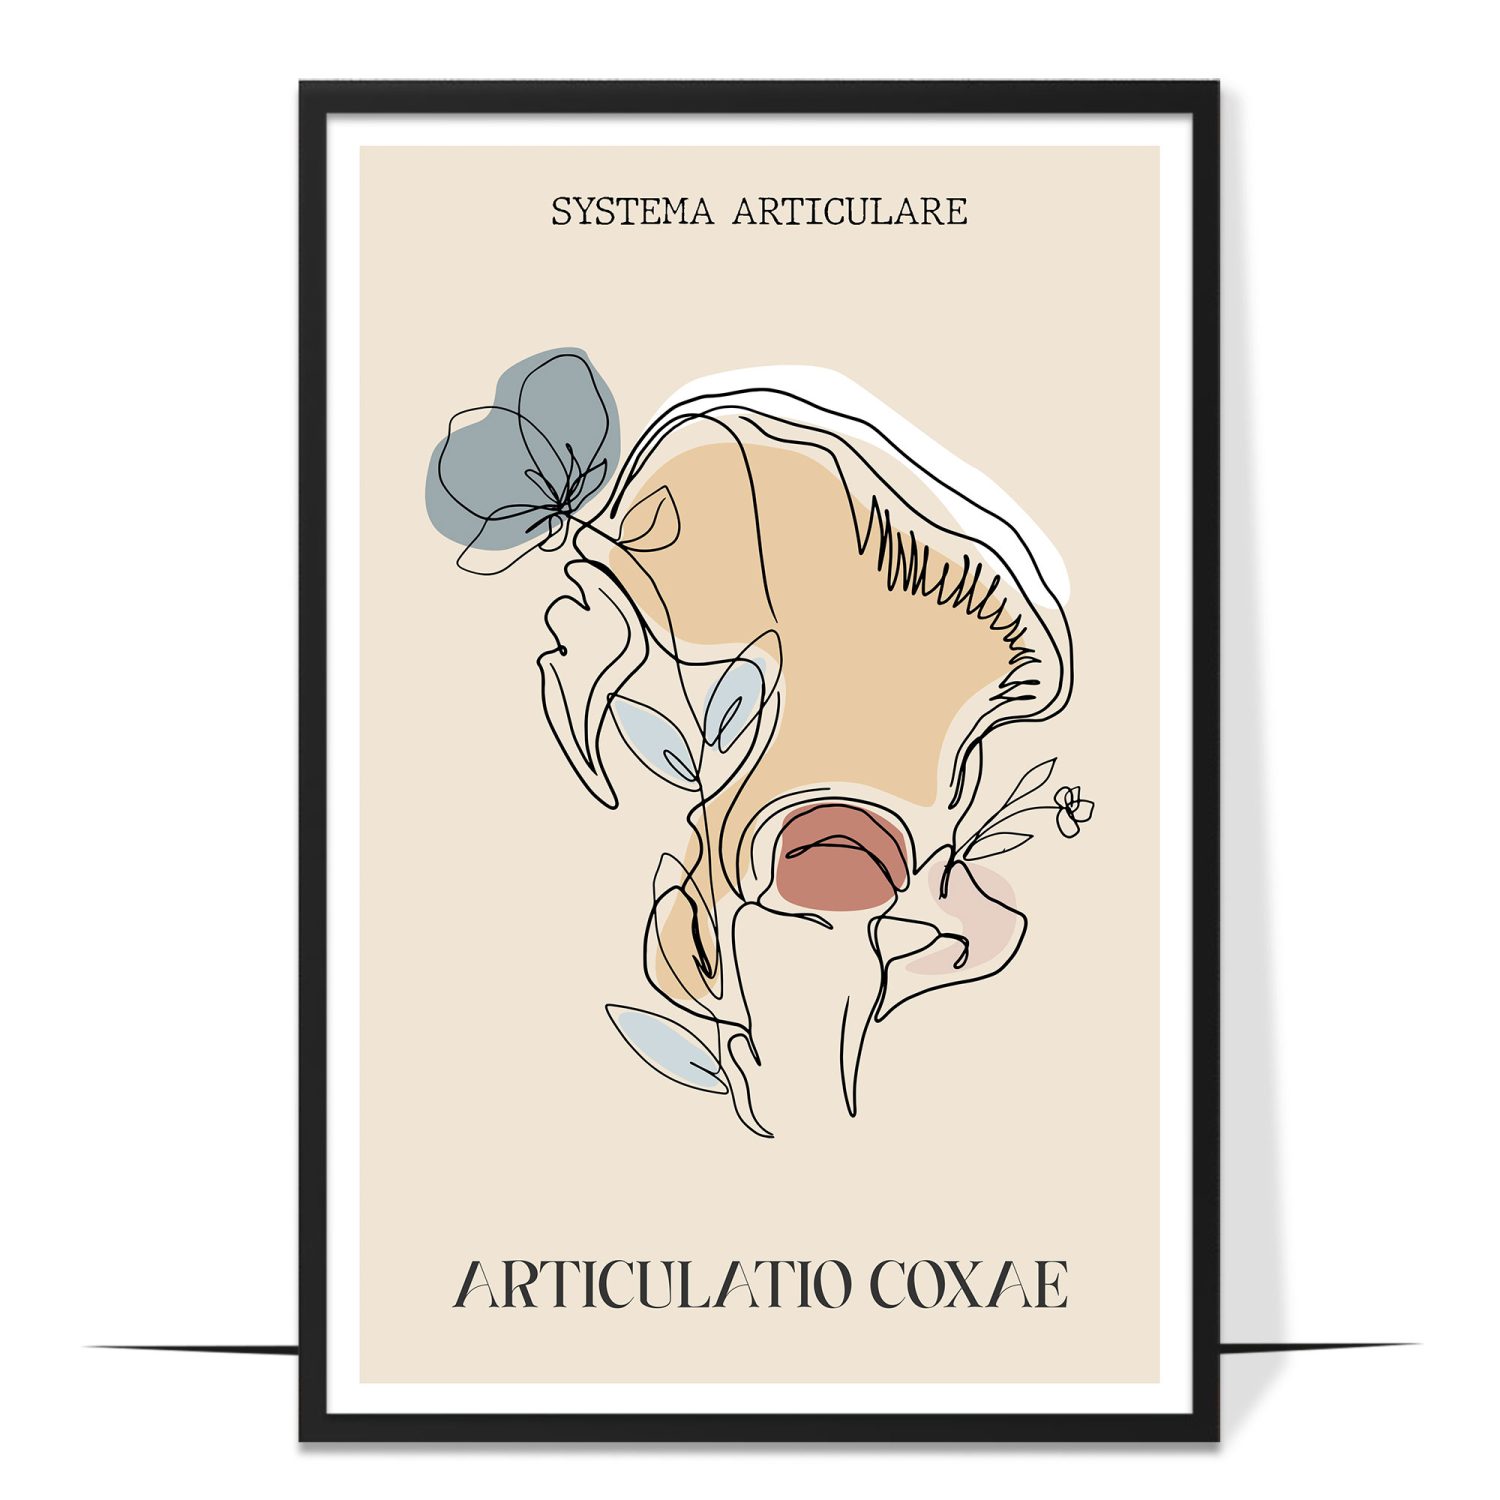 Abstract Articulatio Coxae Anatomy Poster